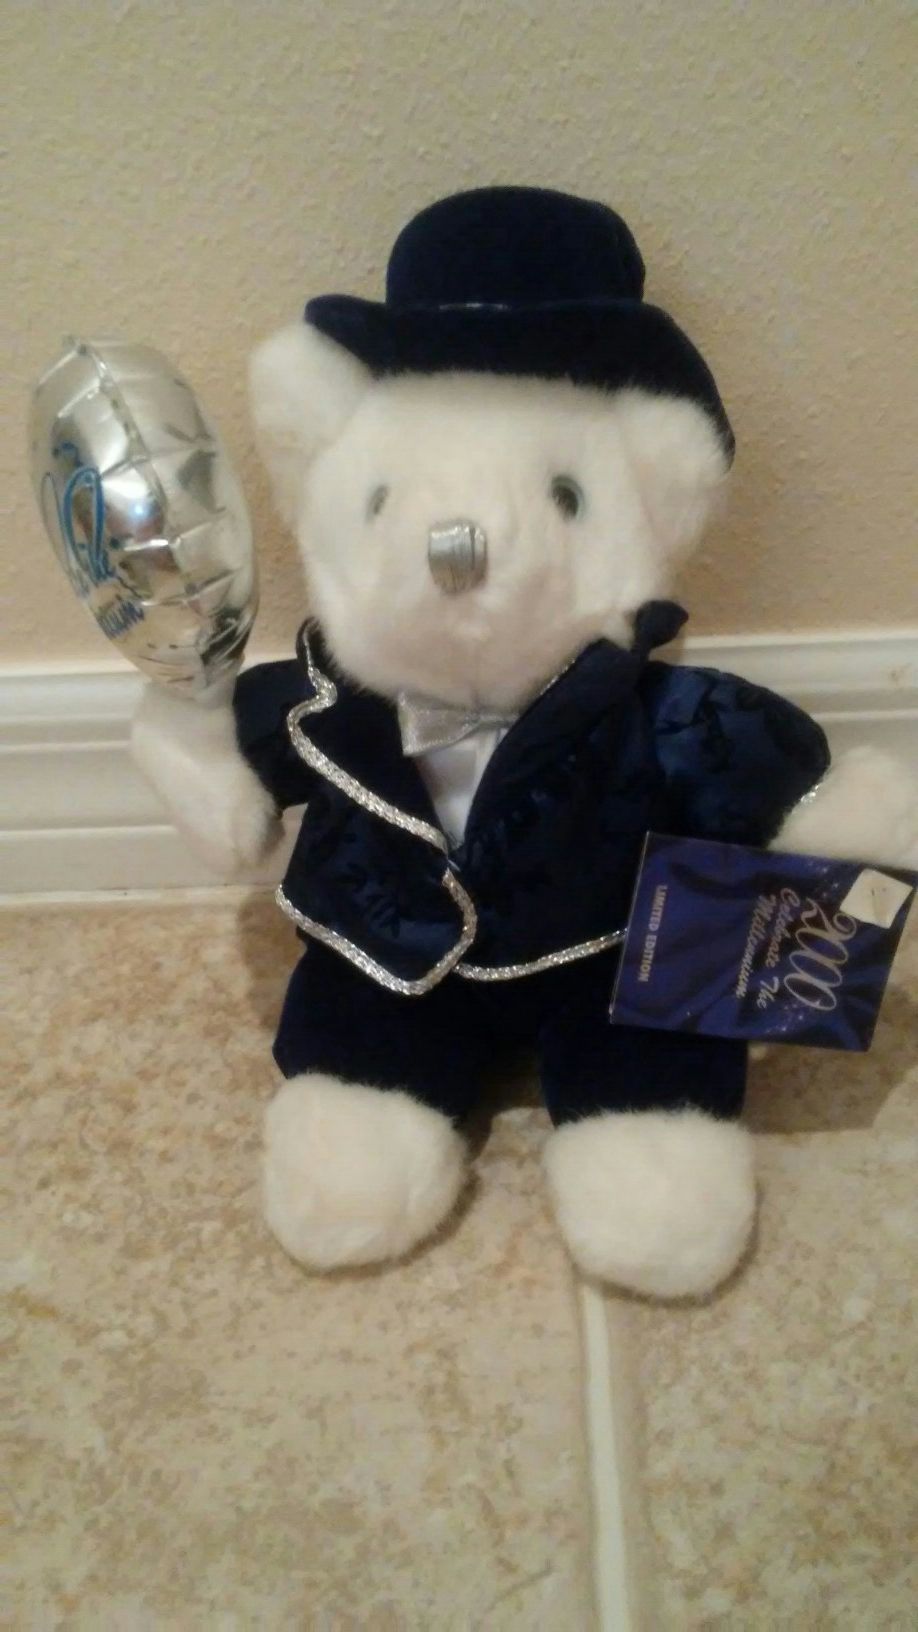 2000 graduation bear